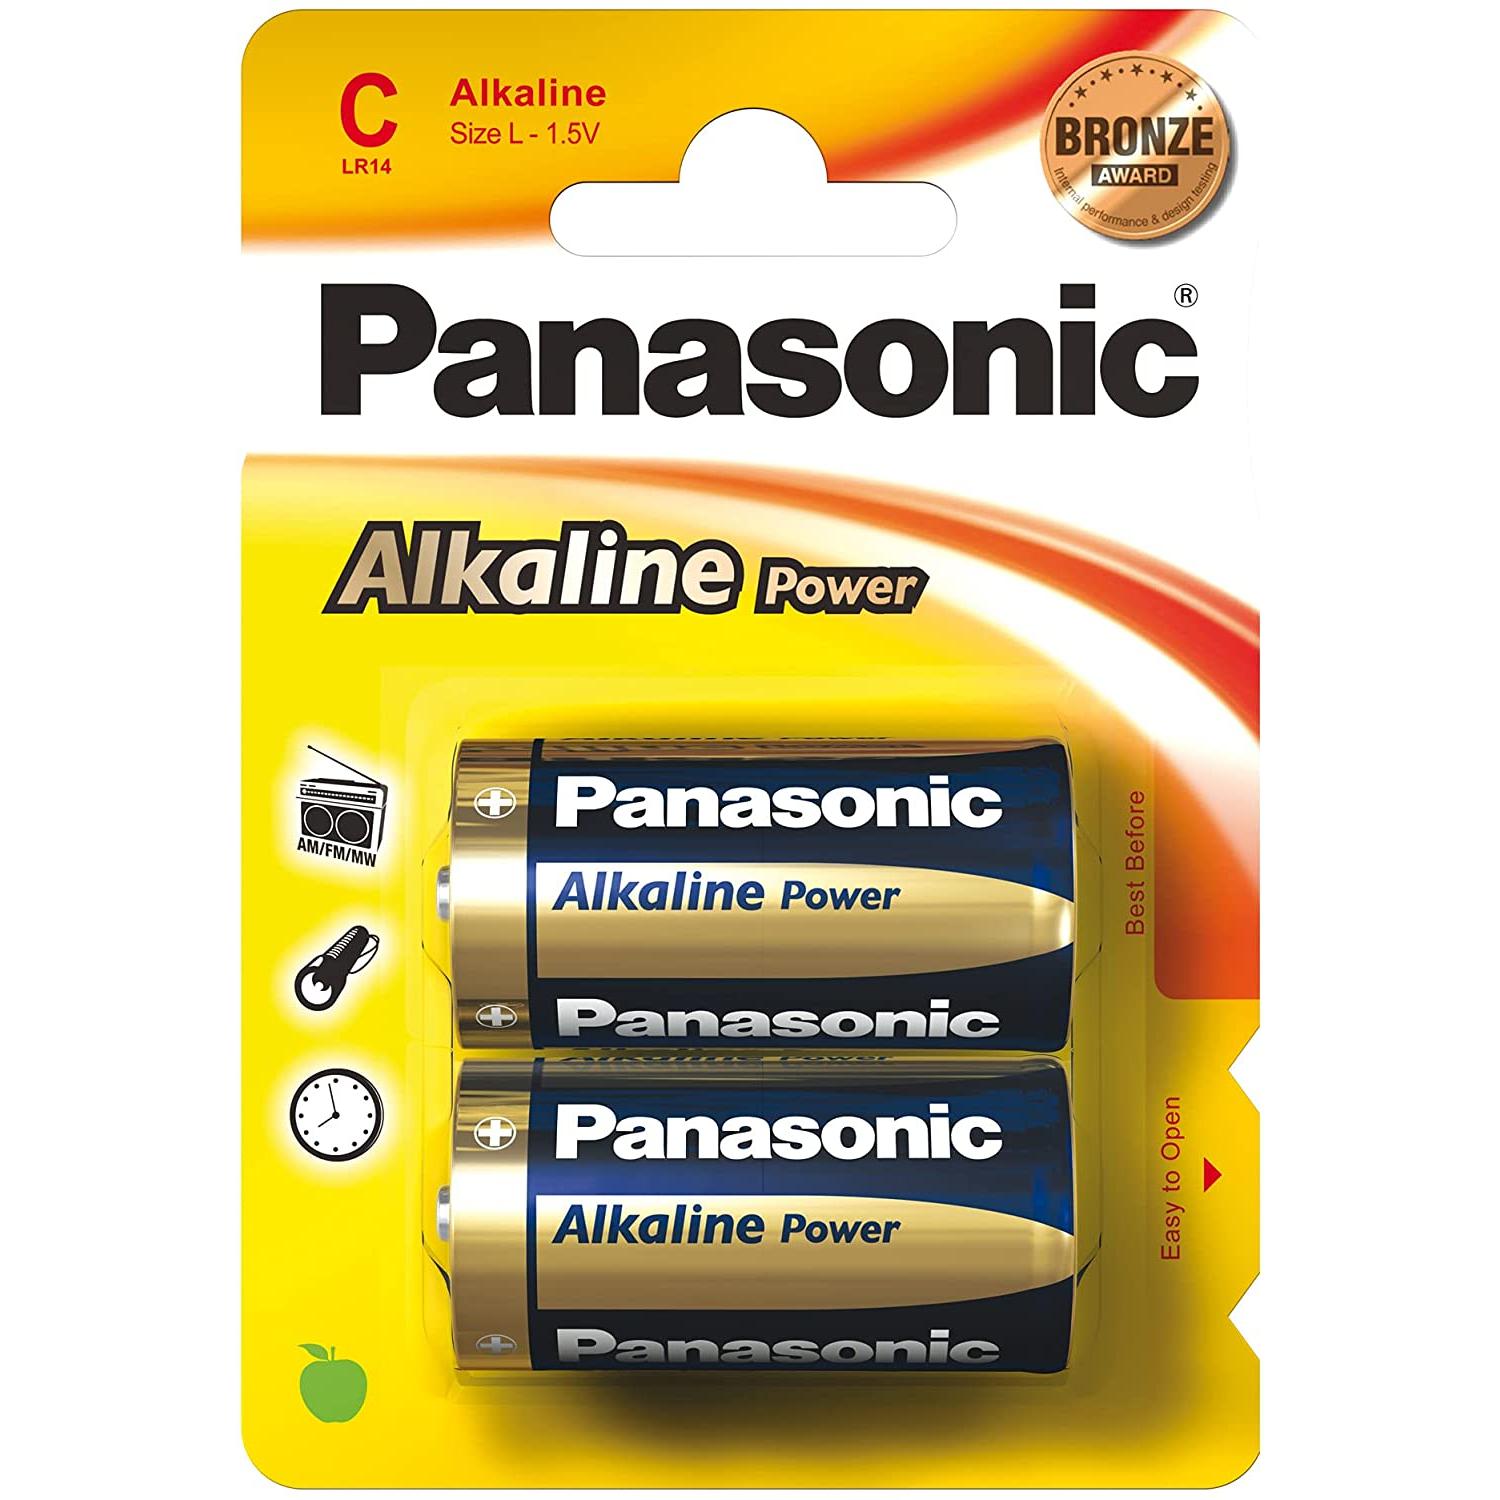 Battery 1.5𝑉 C Alkaline Panasonic-Batteries-Panasonic-2 Pack-diyshop.co.za